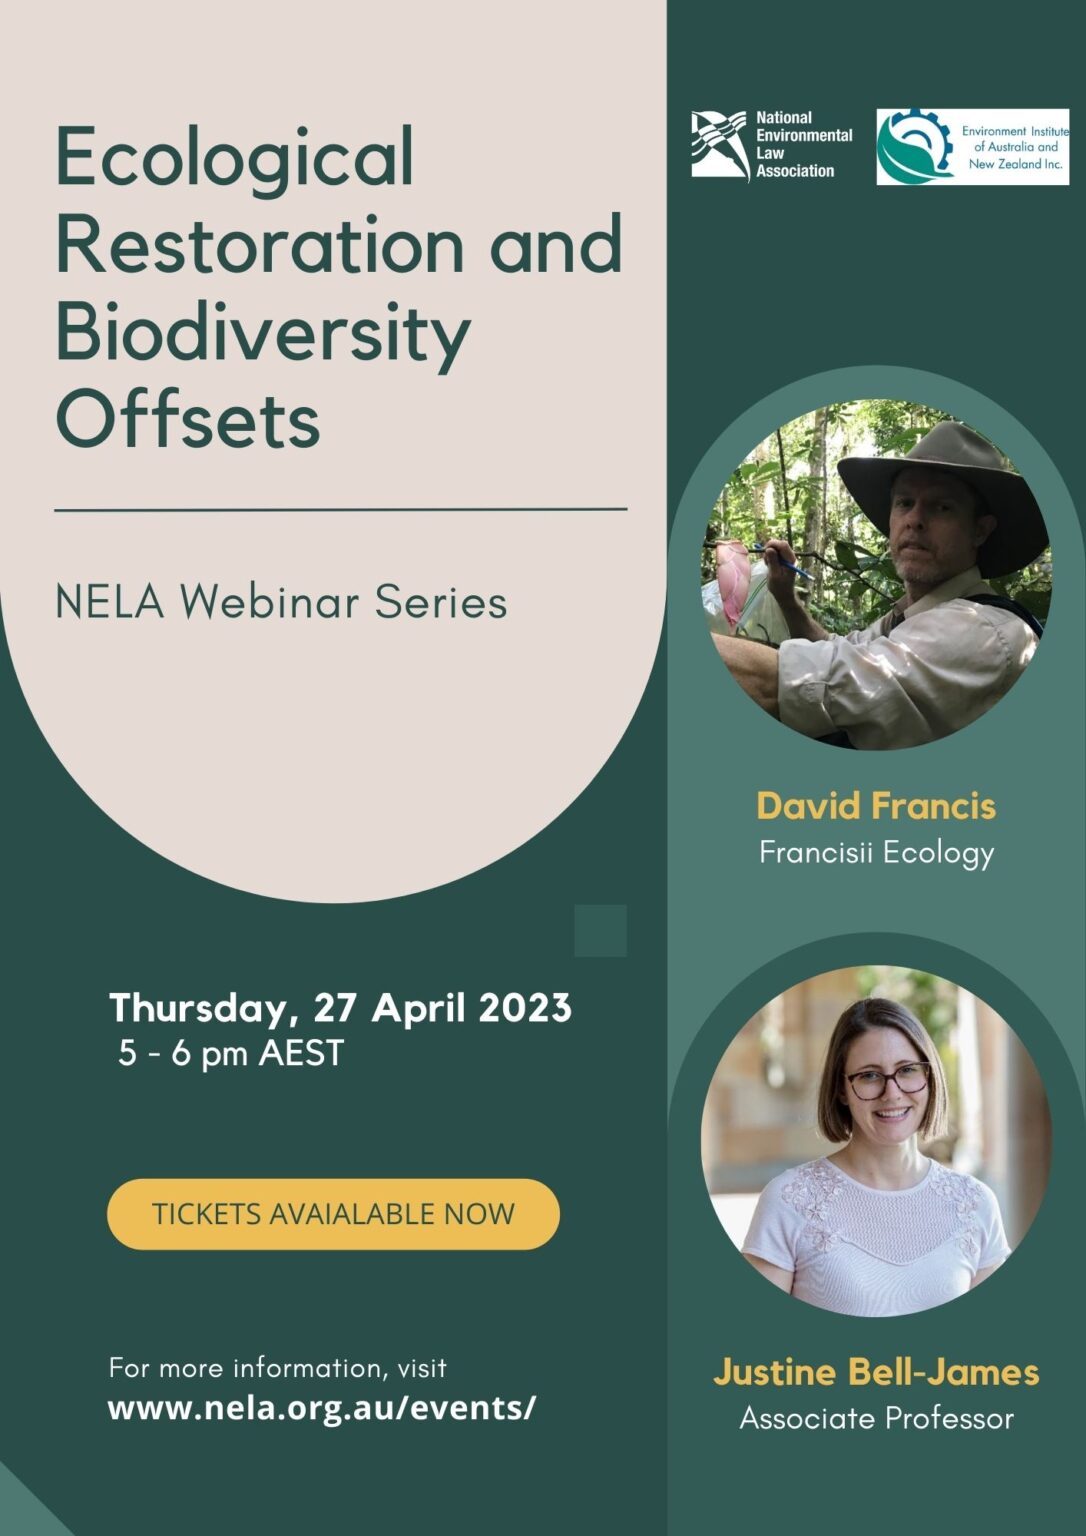 NELA Webinar Series Ecological Restoration and Biodiversity Offsets